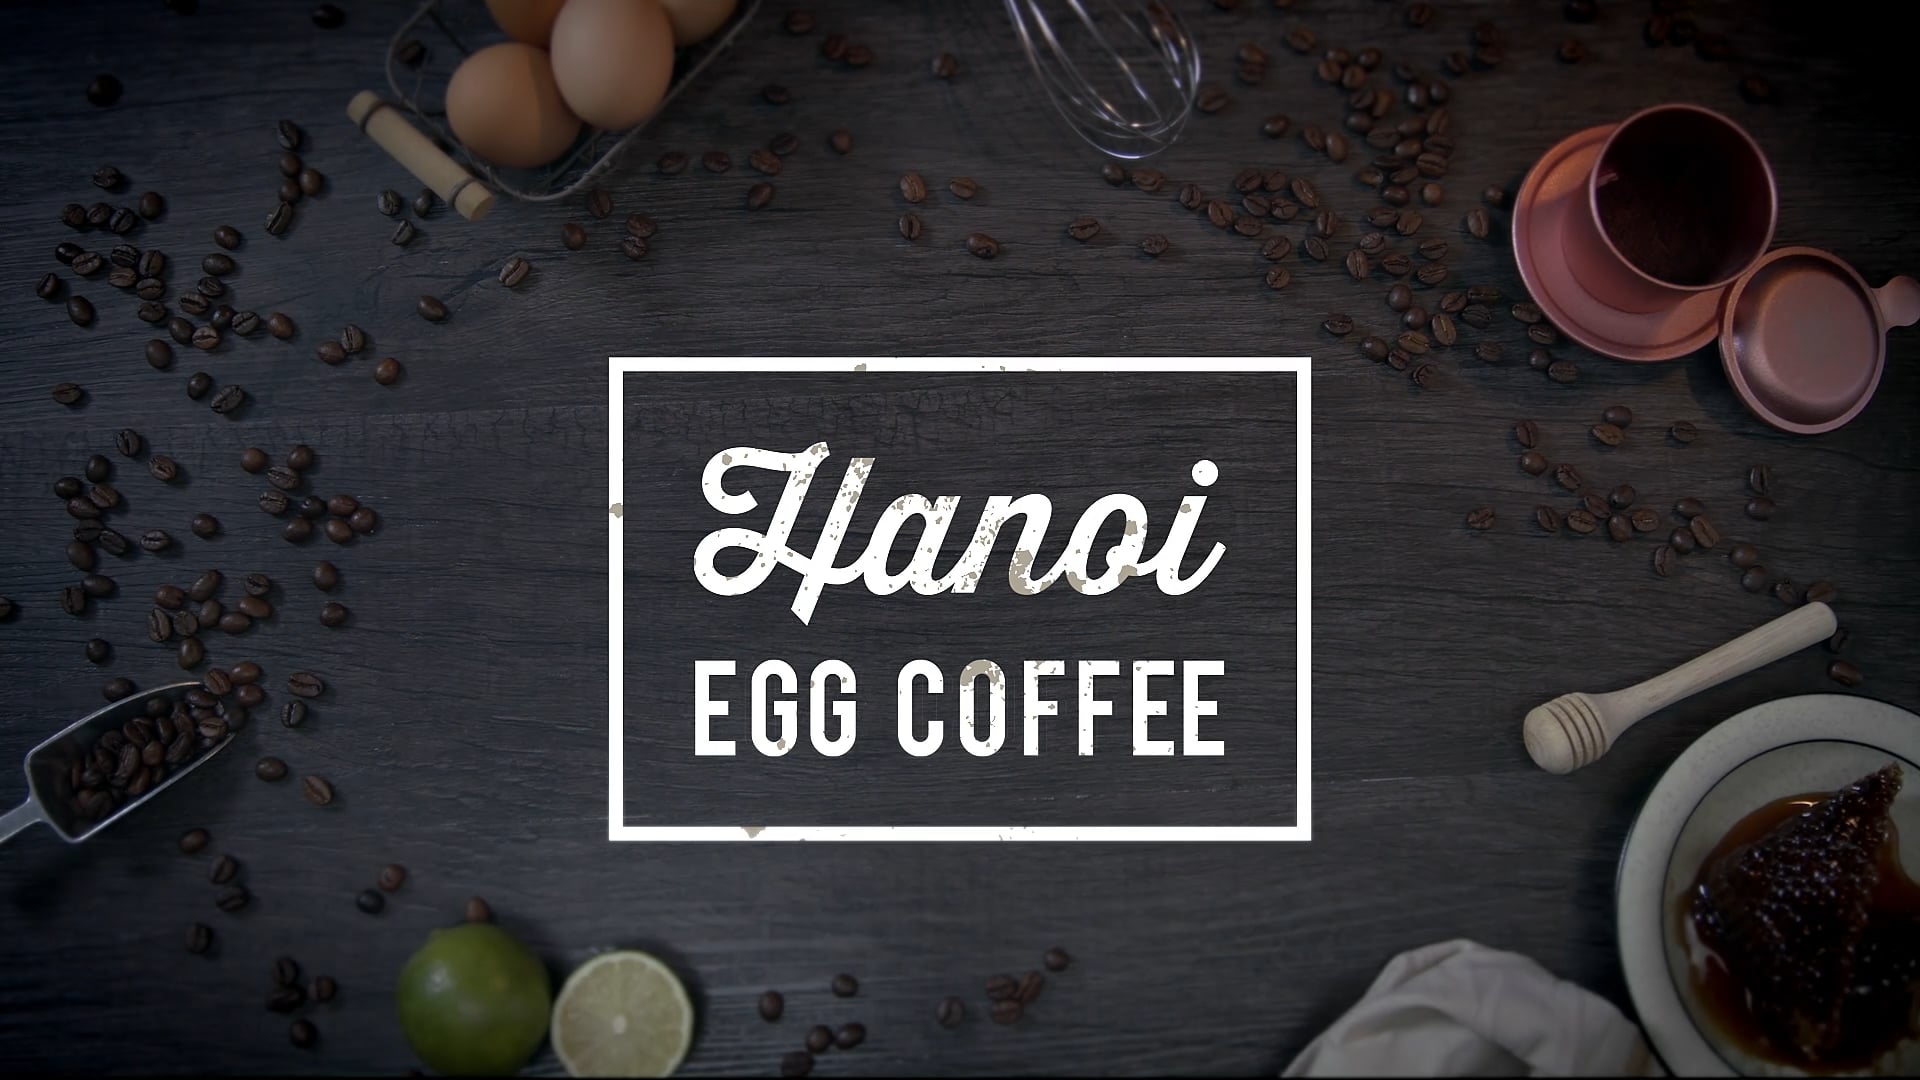 HANOI EGG COFFEE | COMMERCIAL